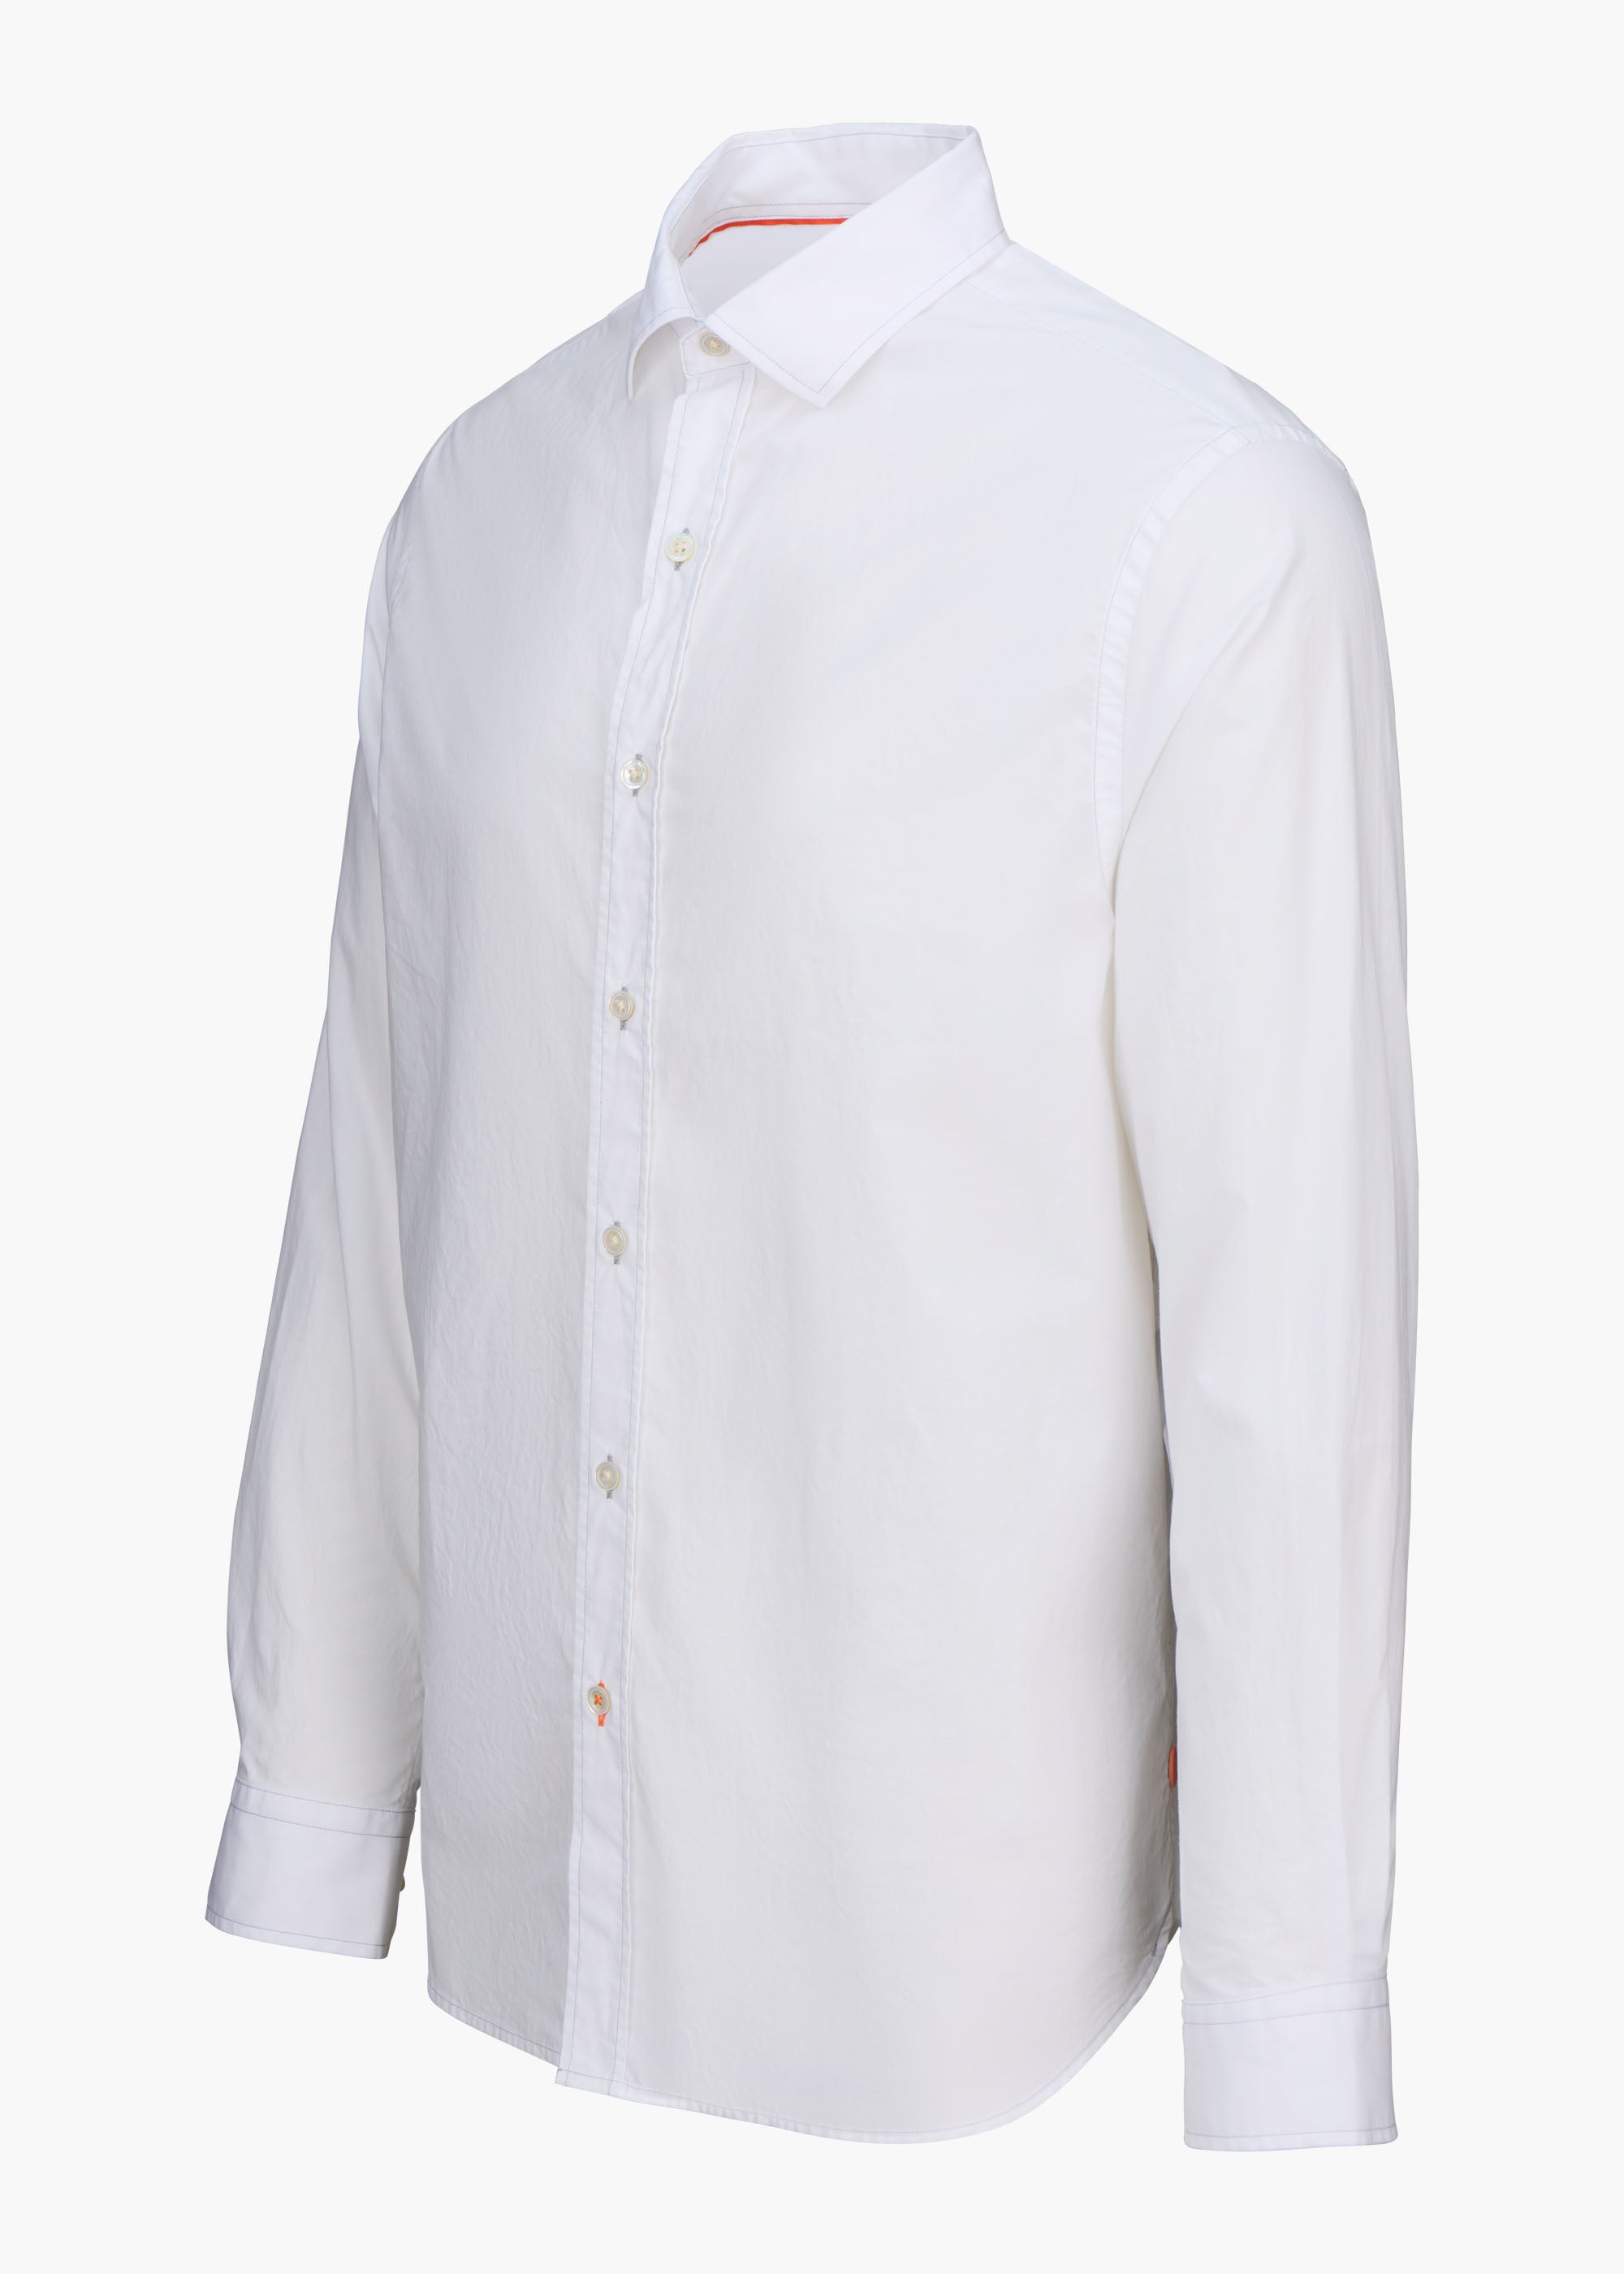 Malfa Garment Dye Shirt - background::white,variant::White